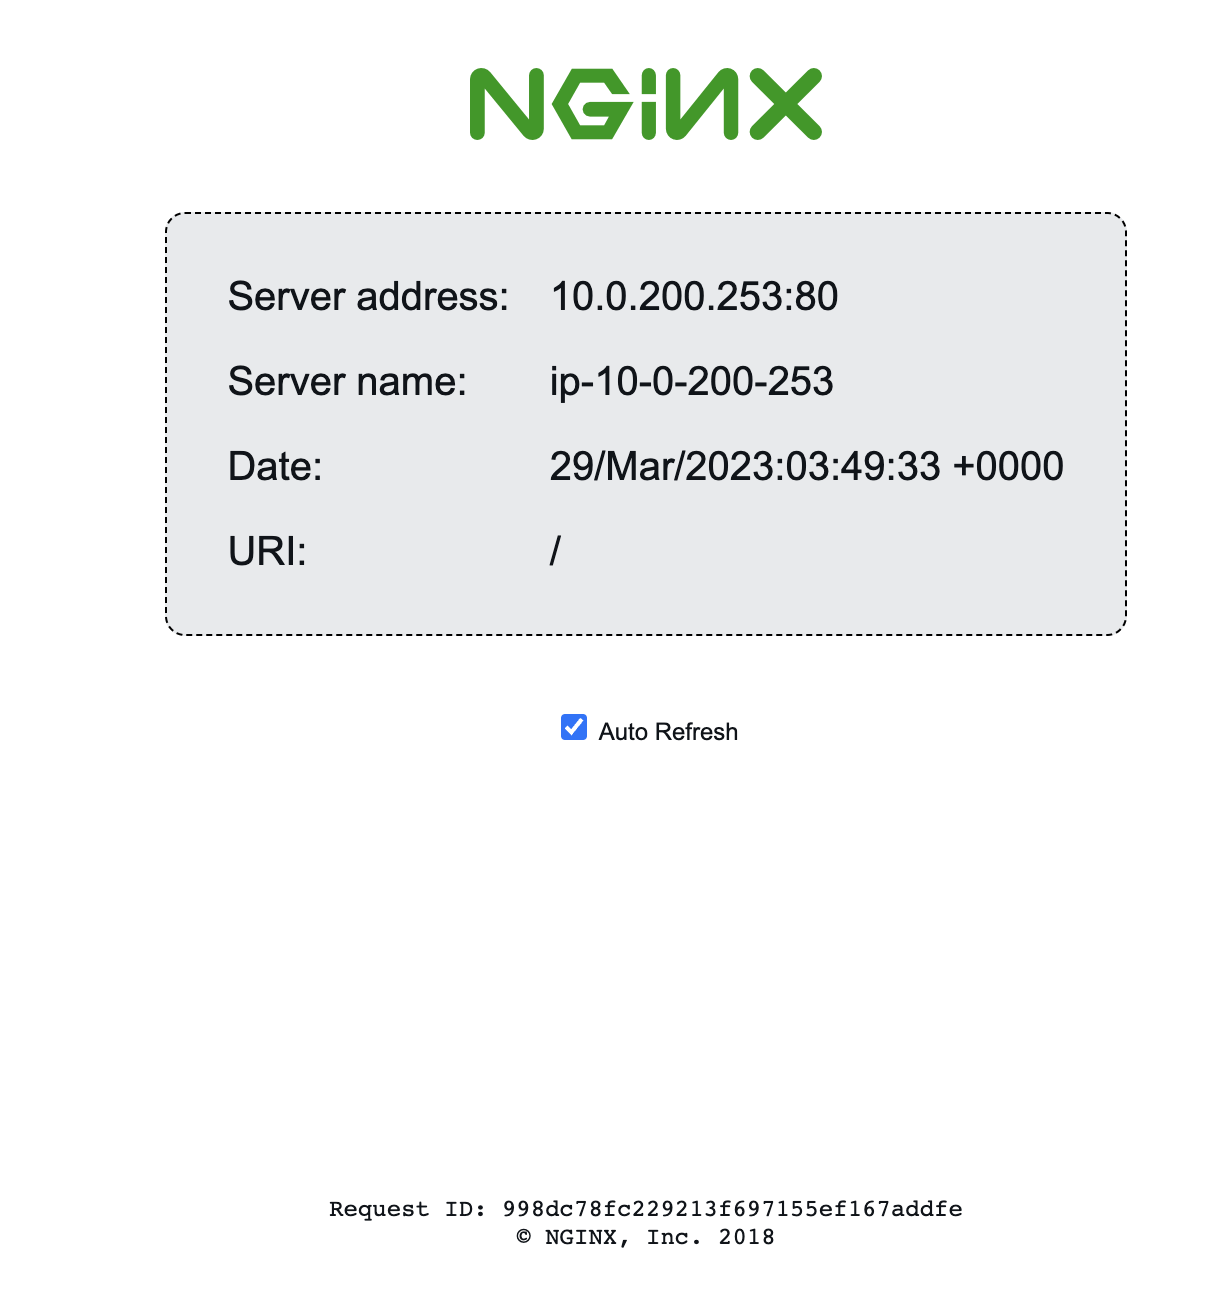 Updated NGINX Portal